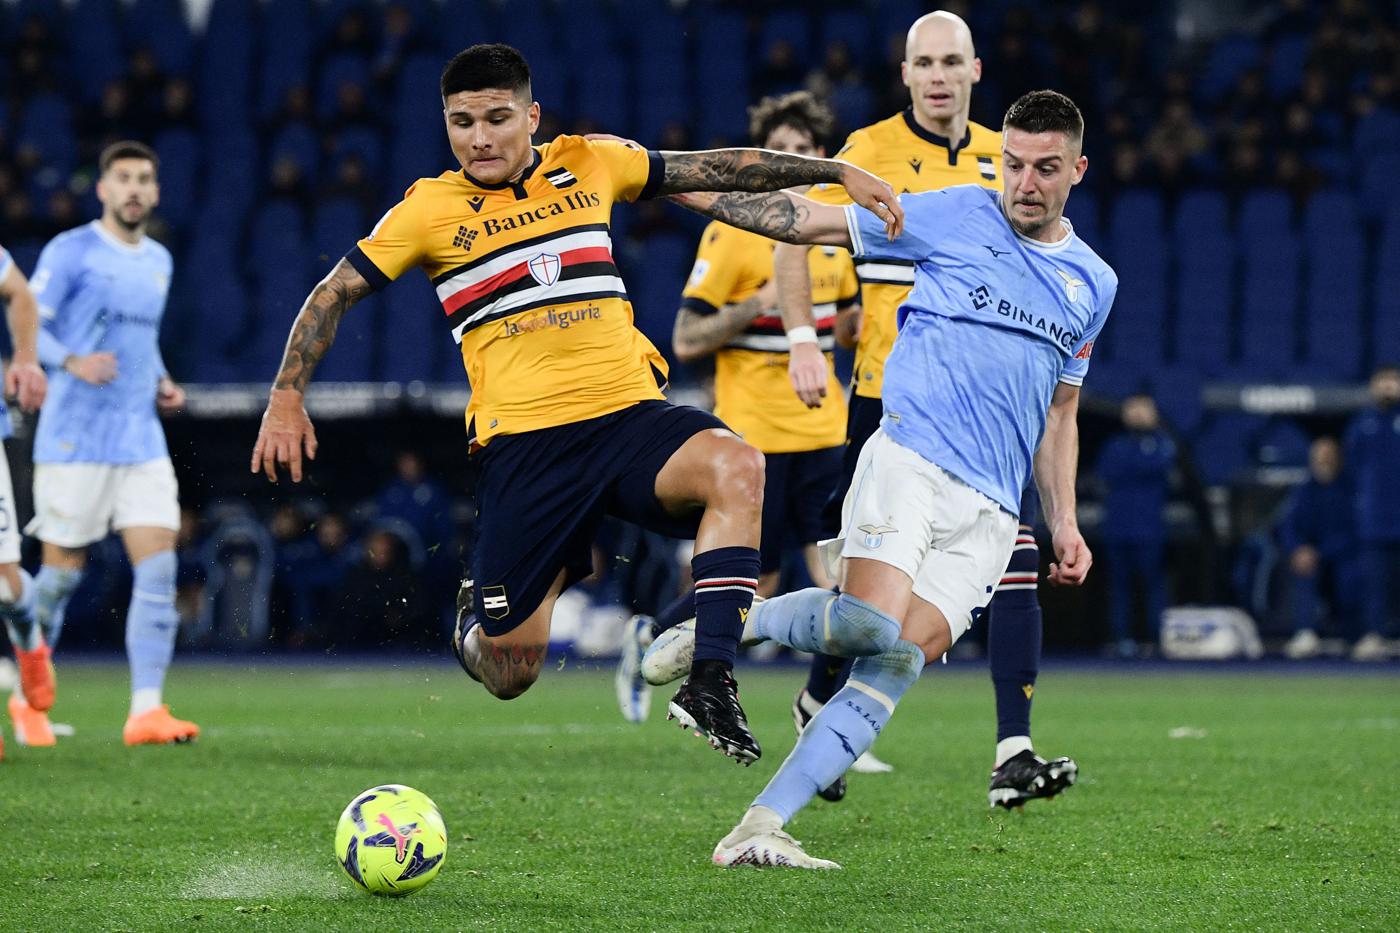 Lazio - Sampdoria - 1:0. Italian Championship, round 24. Match review, statistics.